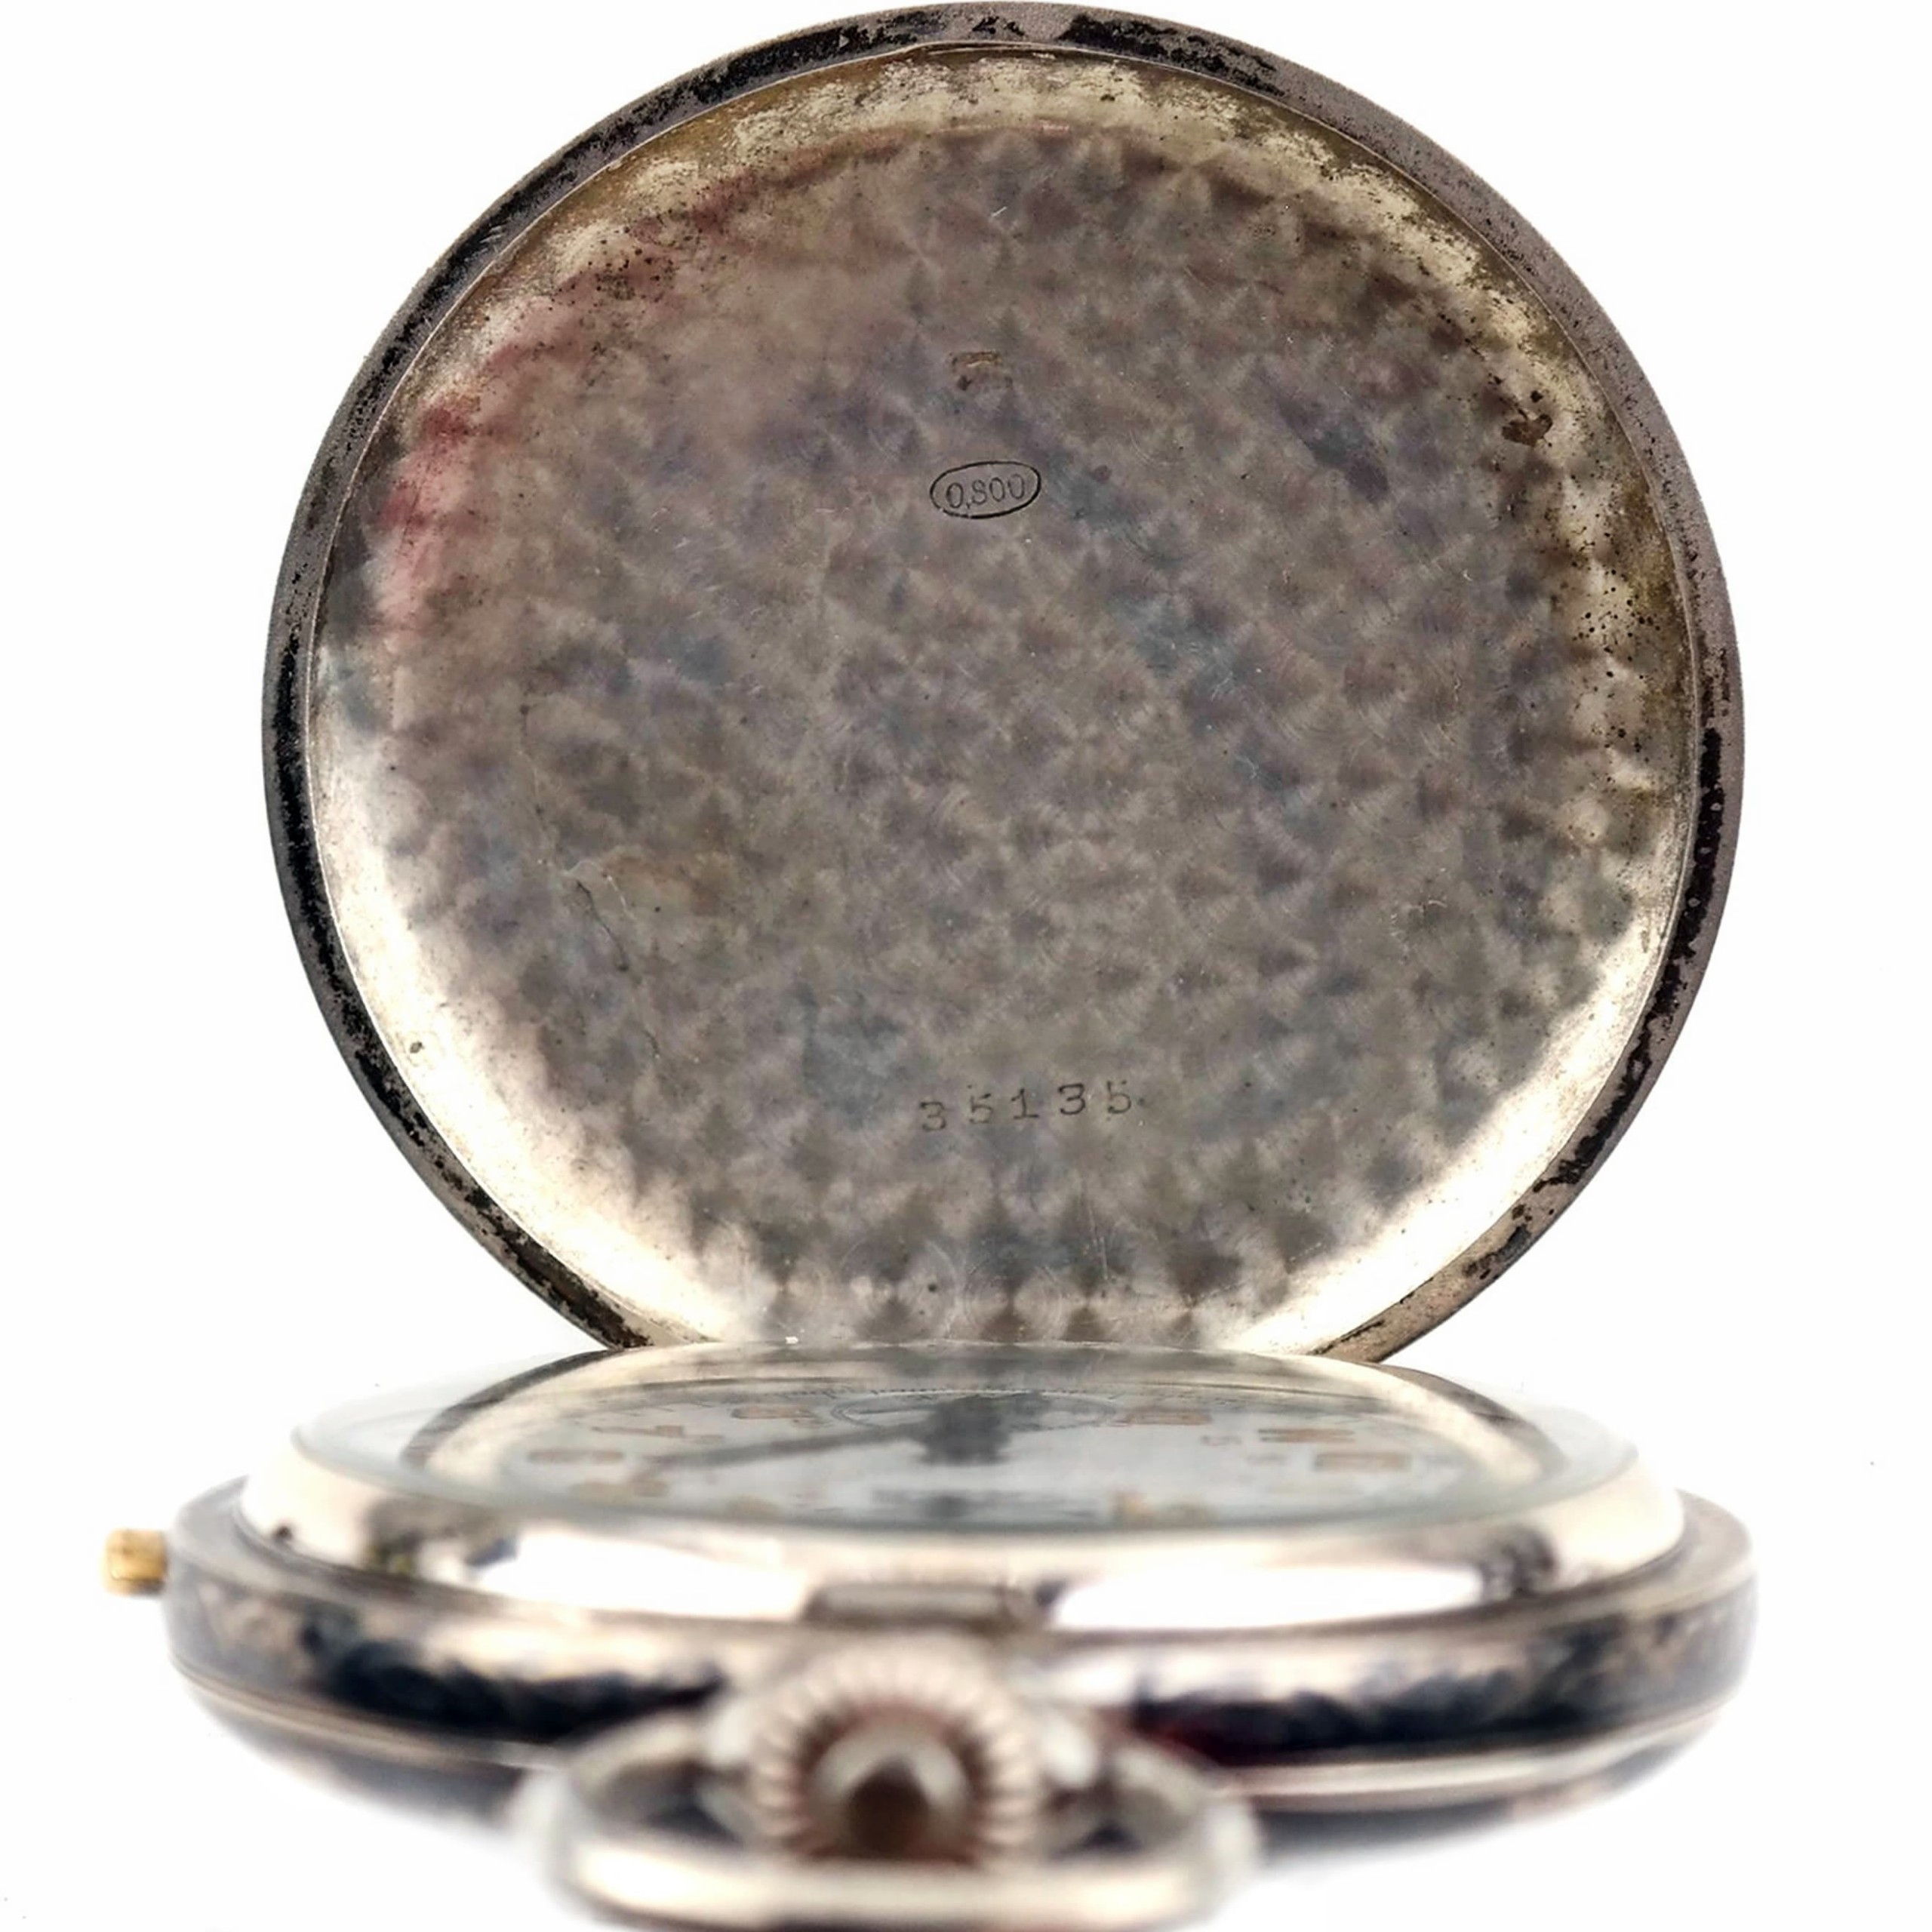 Single Pusher Column Wheel Chronograph Vintage Silver Pocket Watch